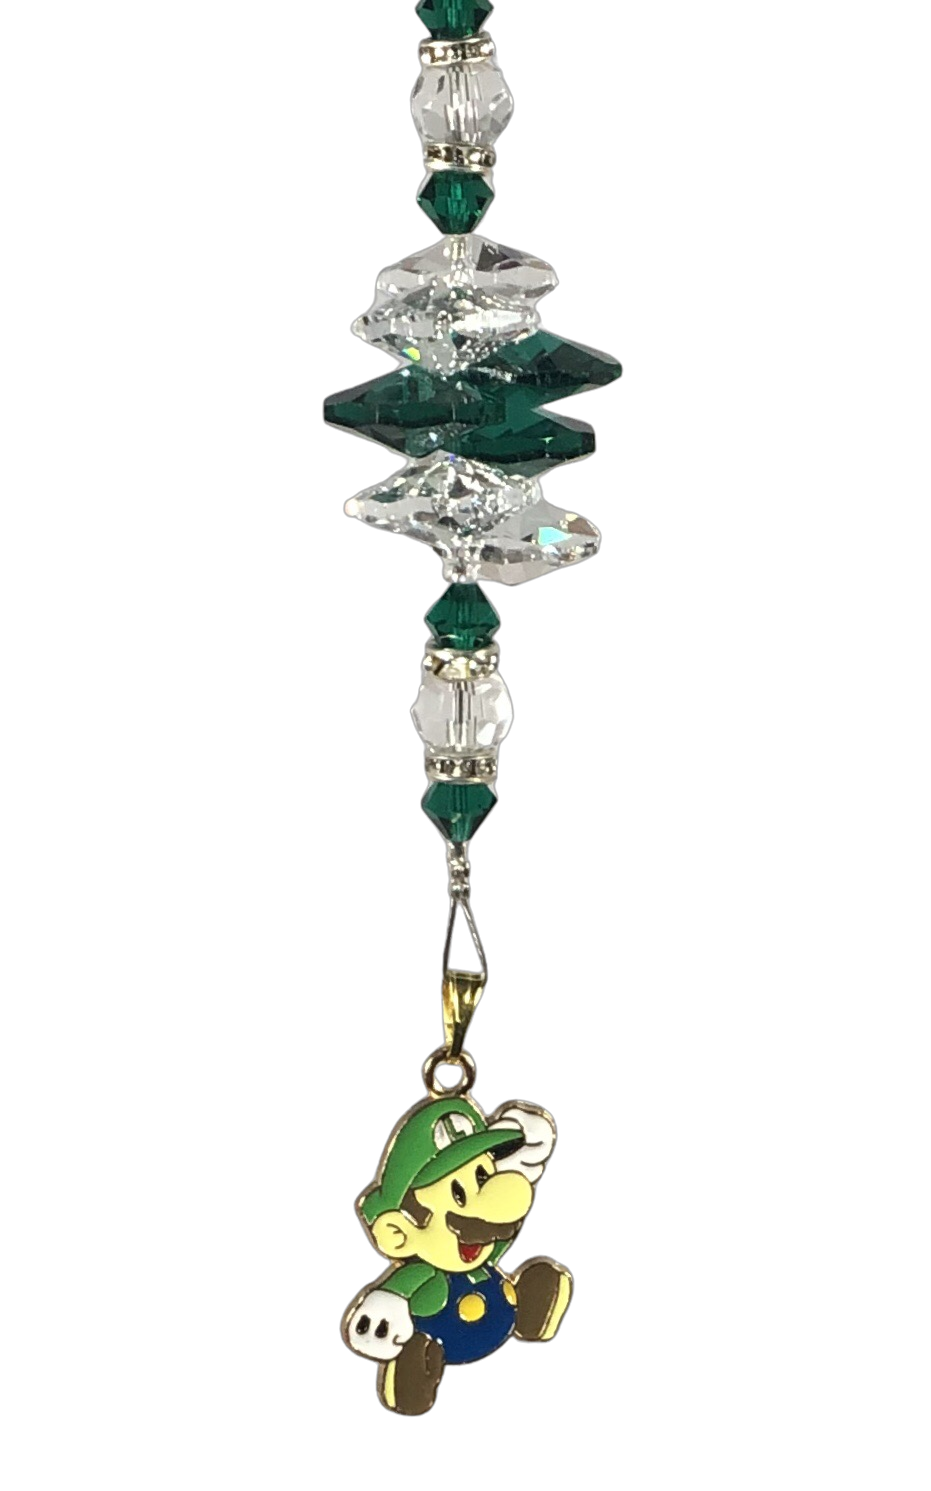 Mario - Luigi crystal suncatcher, decorated with Malachite gemstone